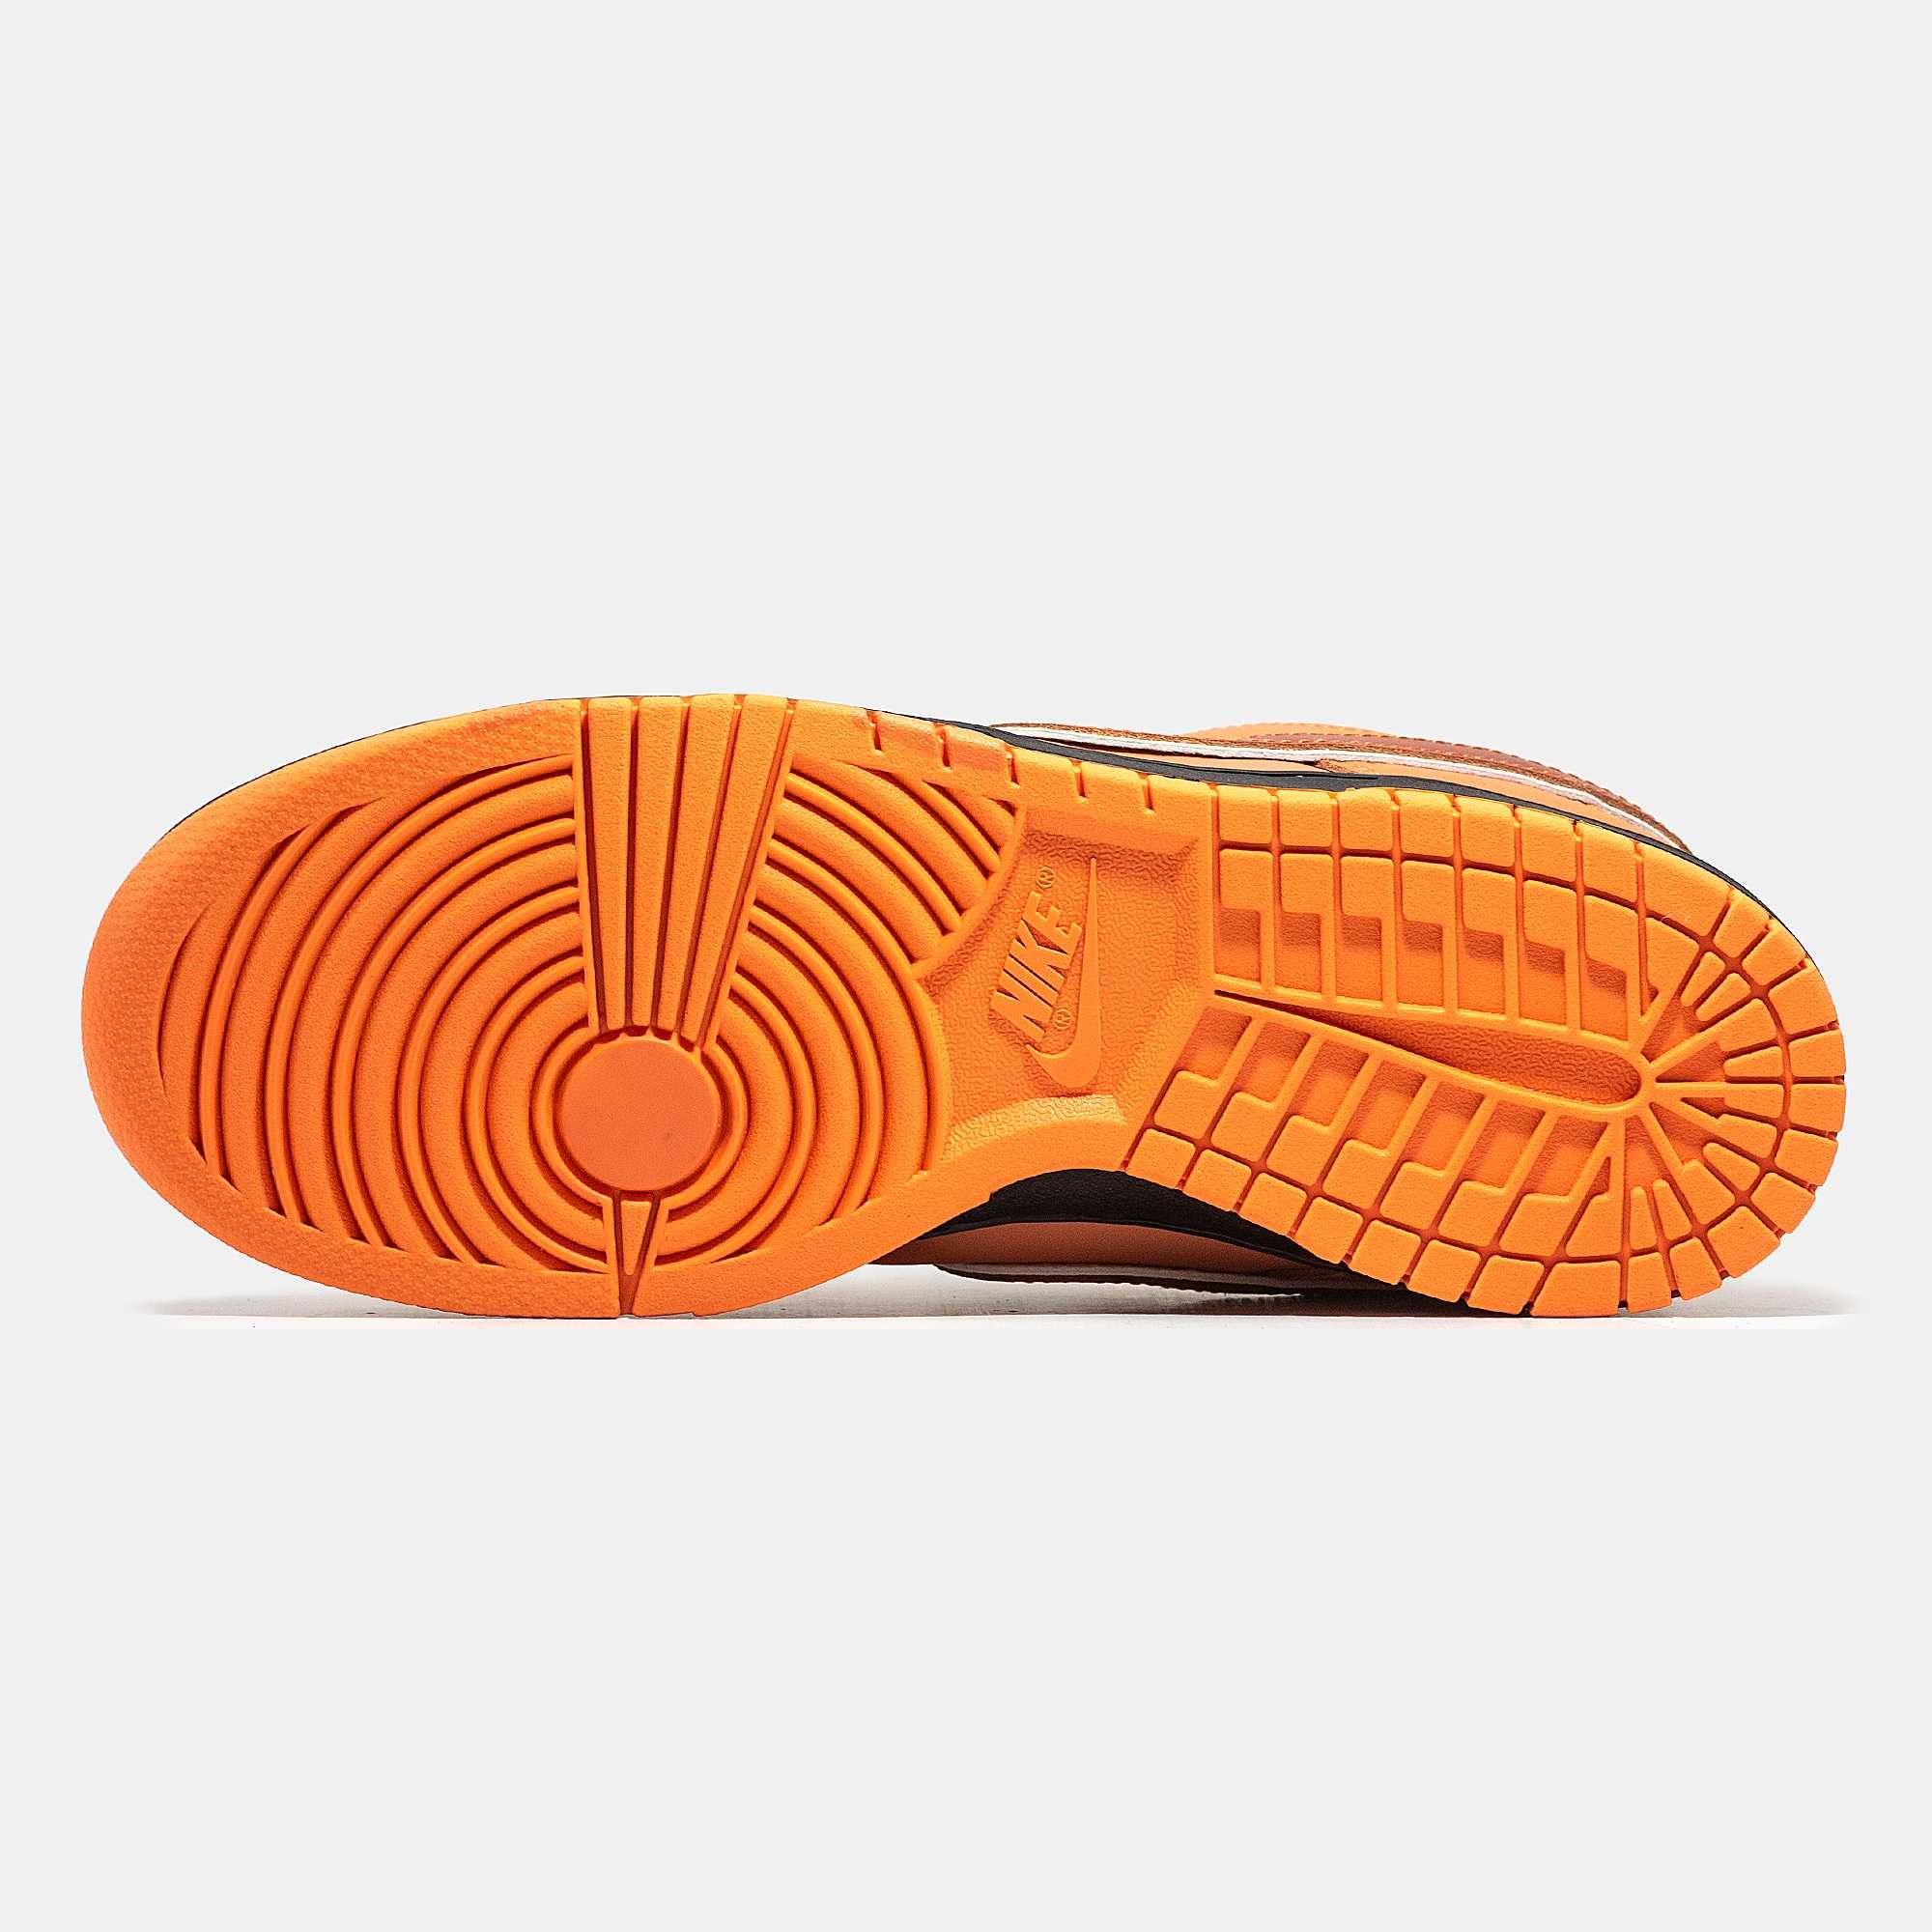 Nike SB Dunk Low Orange Lobster кроссовки мужские данк сб (dunk sb)